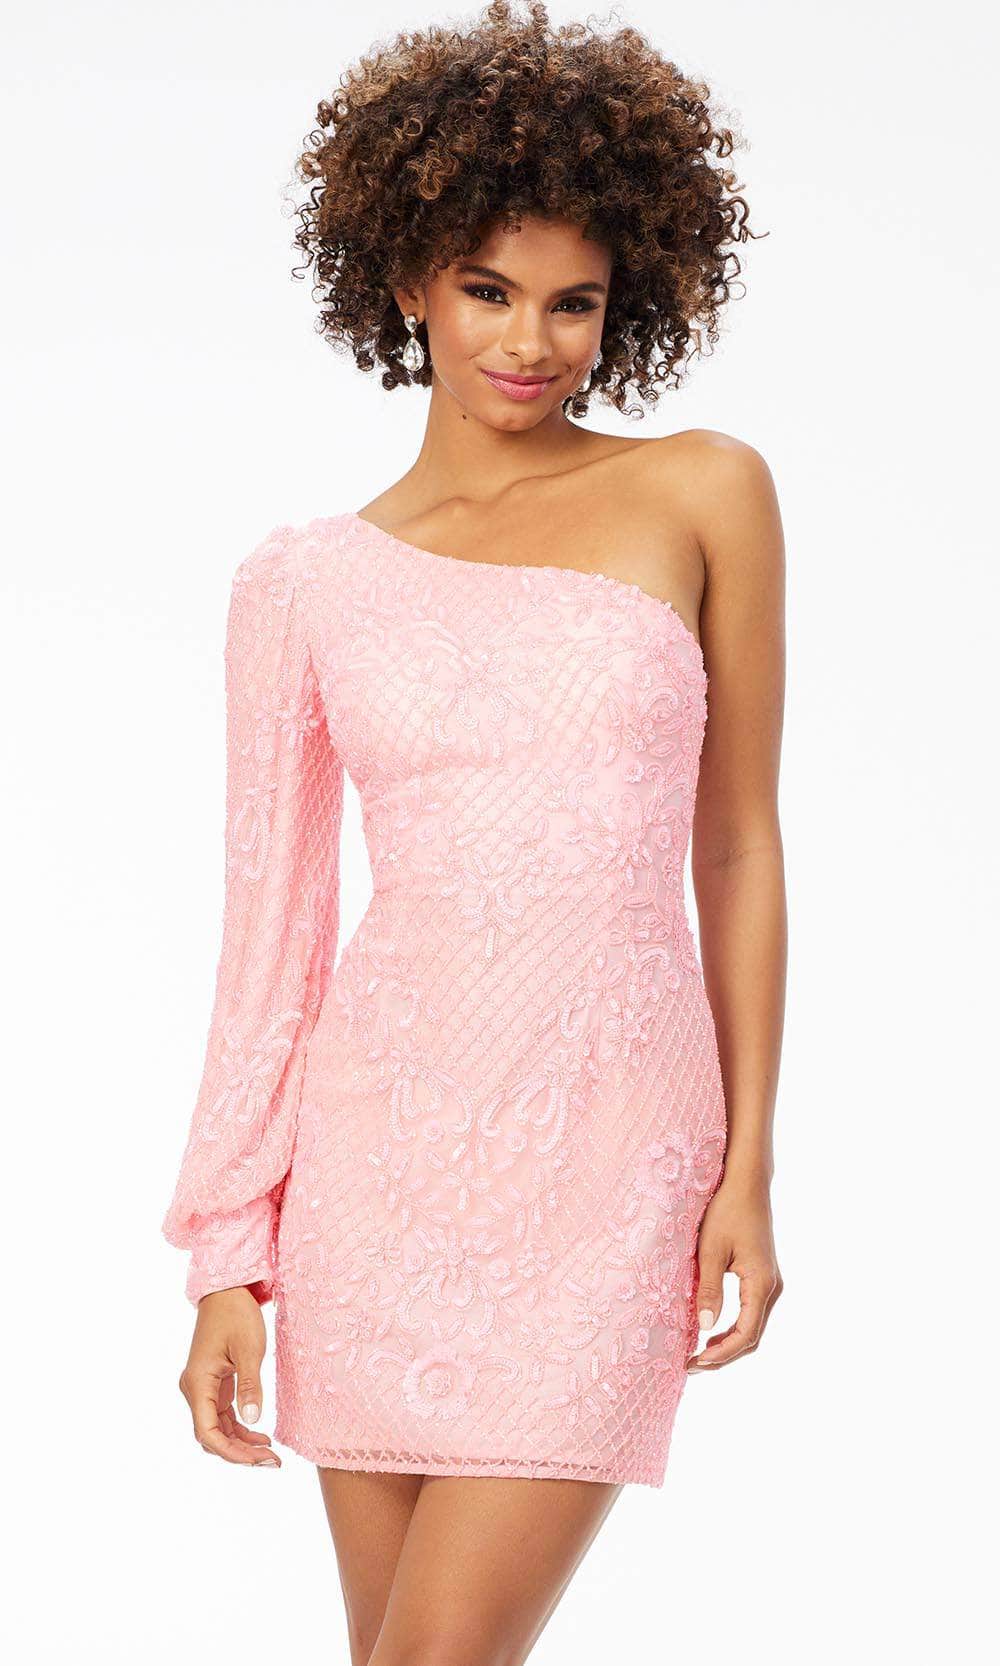 Ashley Lauren 4497 - One Shoulder Long Bishop Sleeve Cocktail Dress Special Occasion Dress 0 / Candy Pink